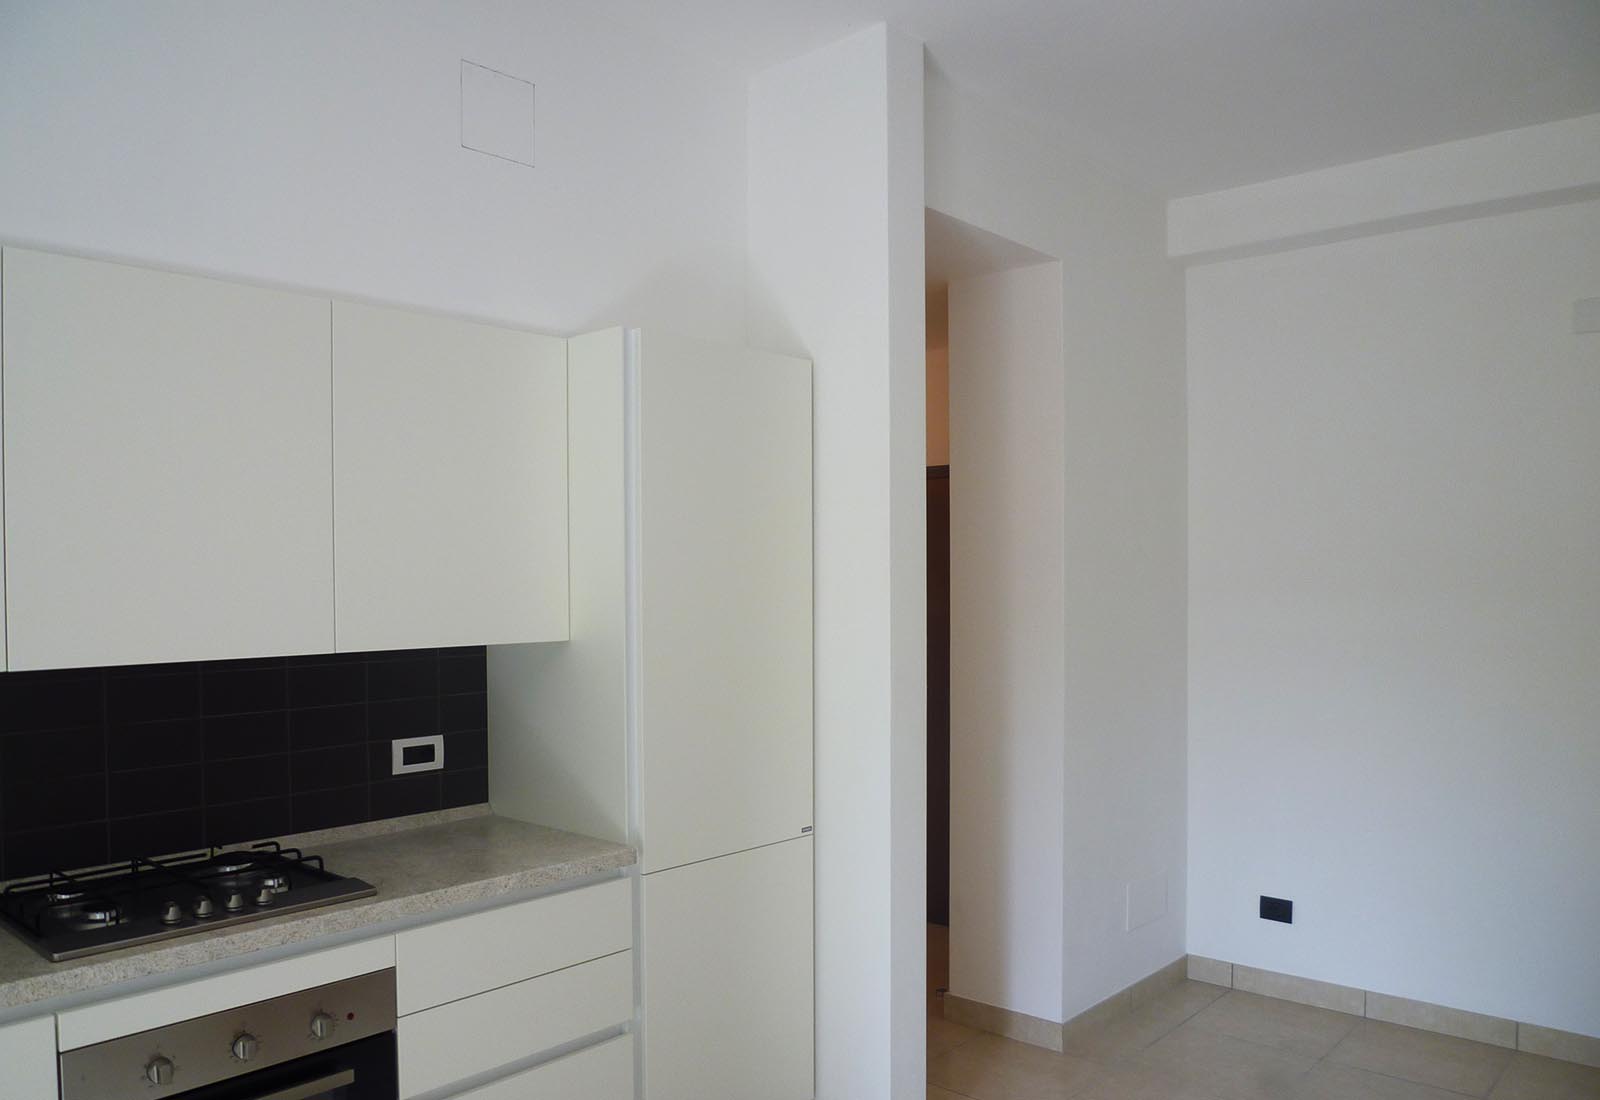 Apartment renovation in Italia street in Rho – The kitchen